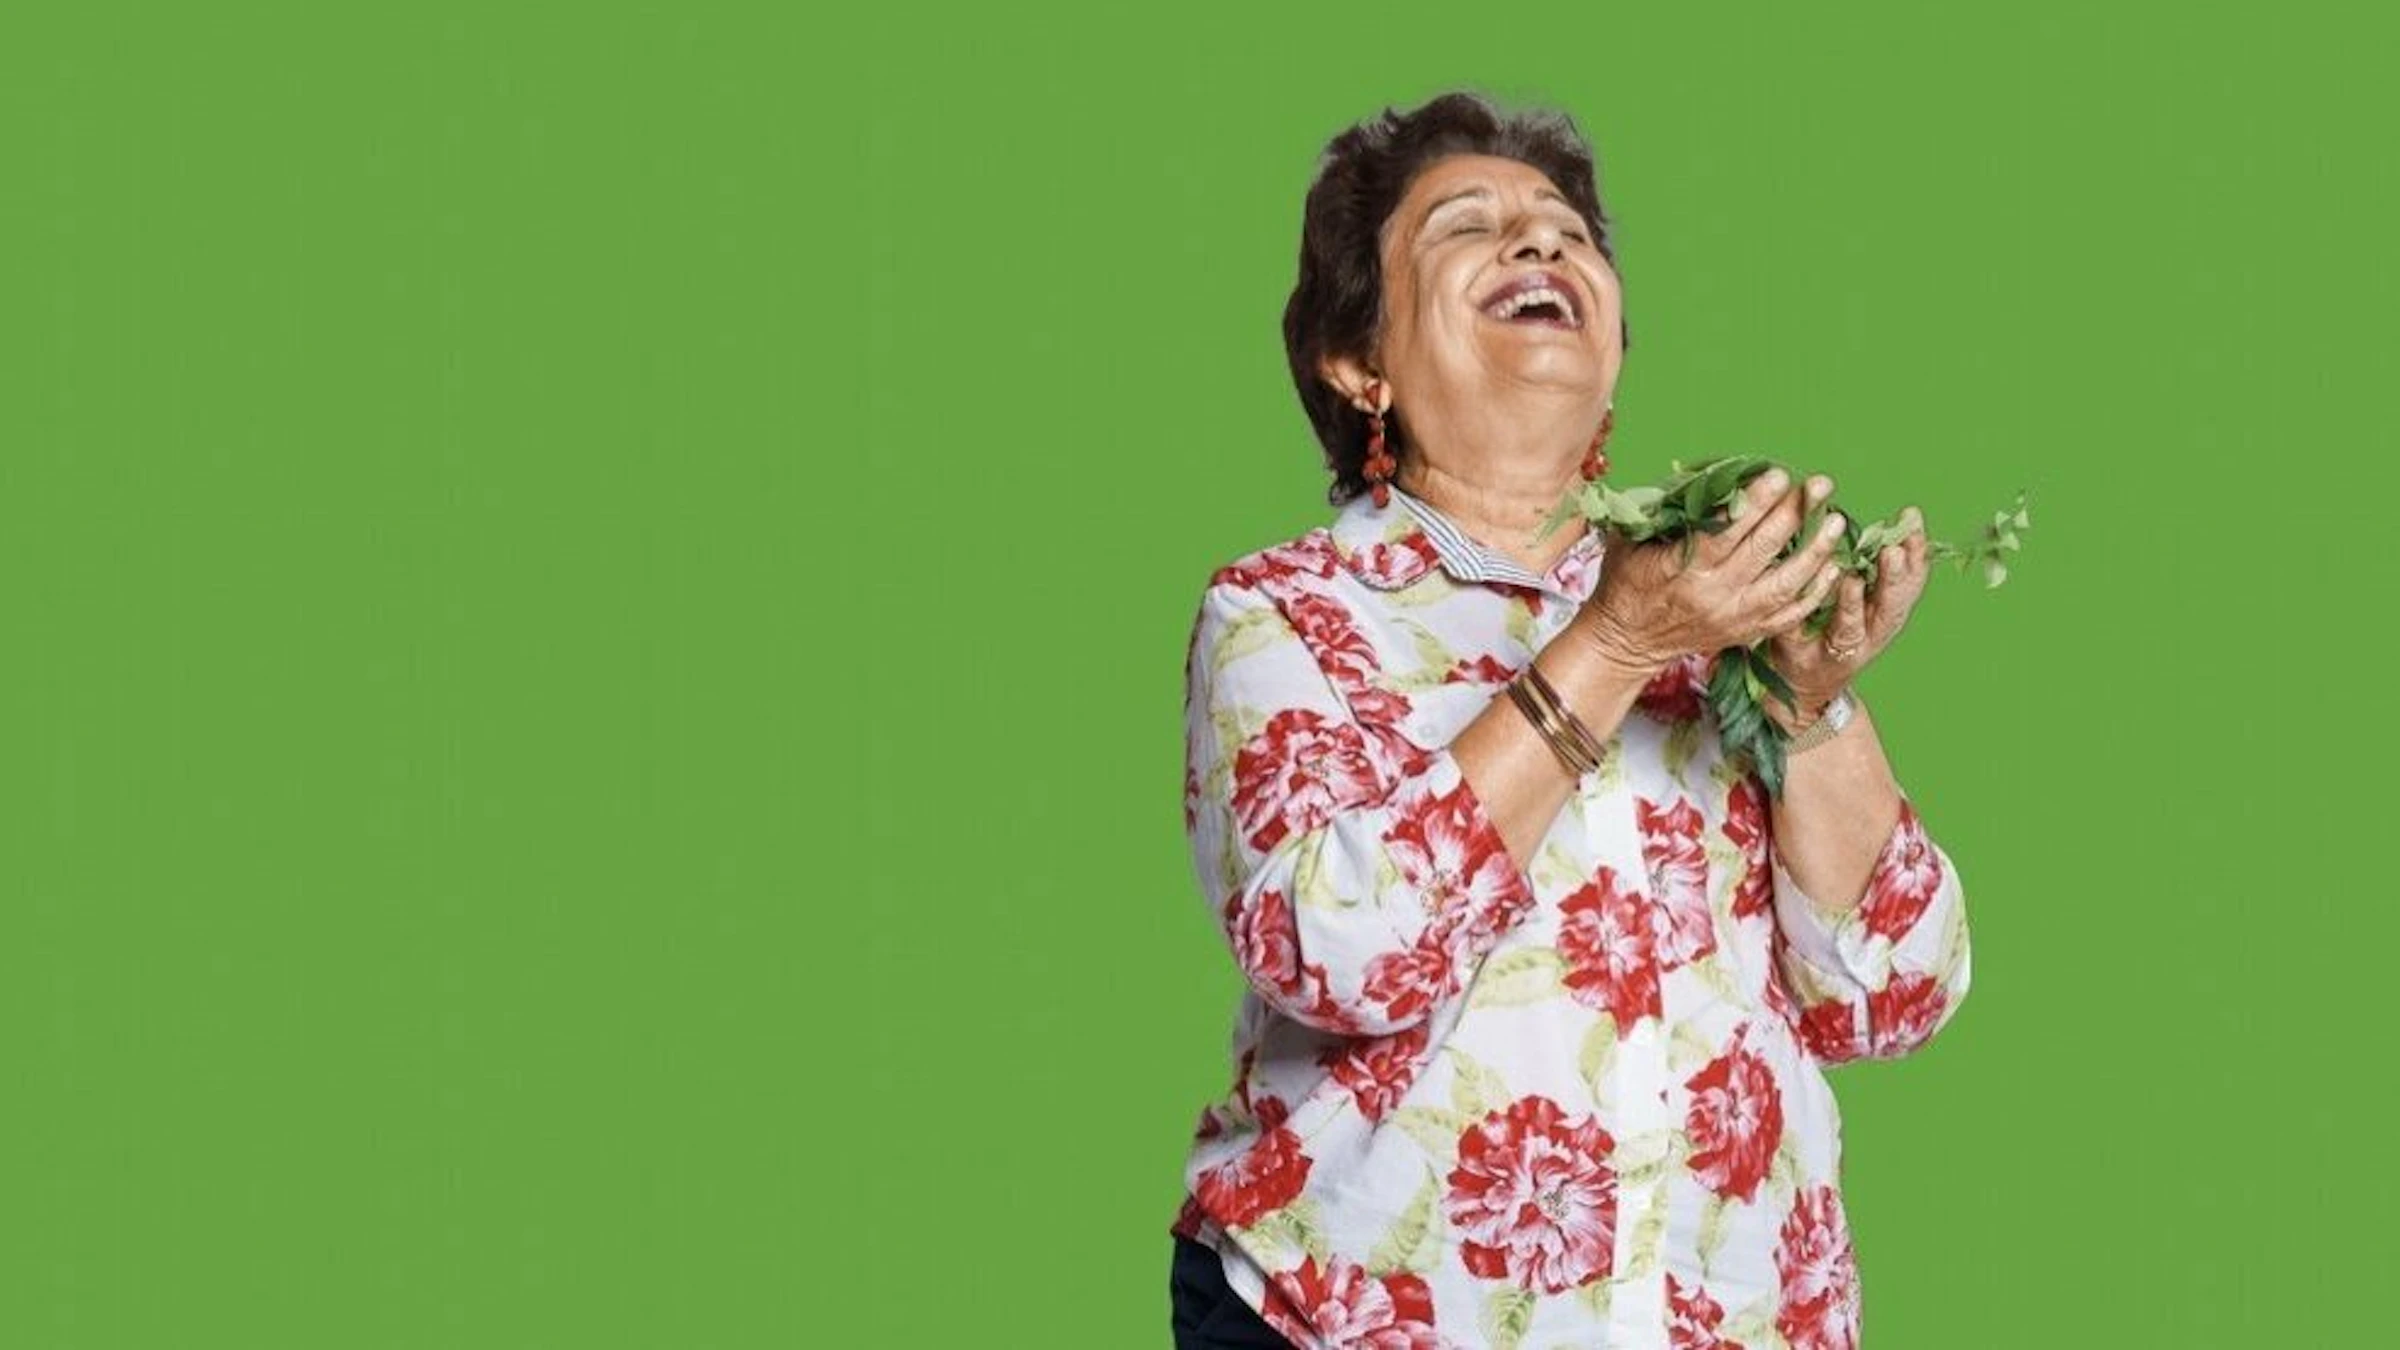 Woman Holding Plants & Laughing Communal Gardening